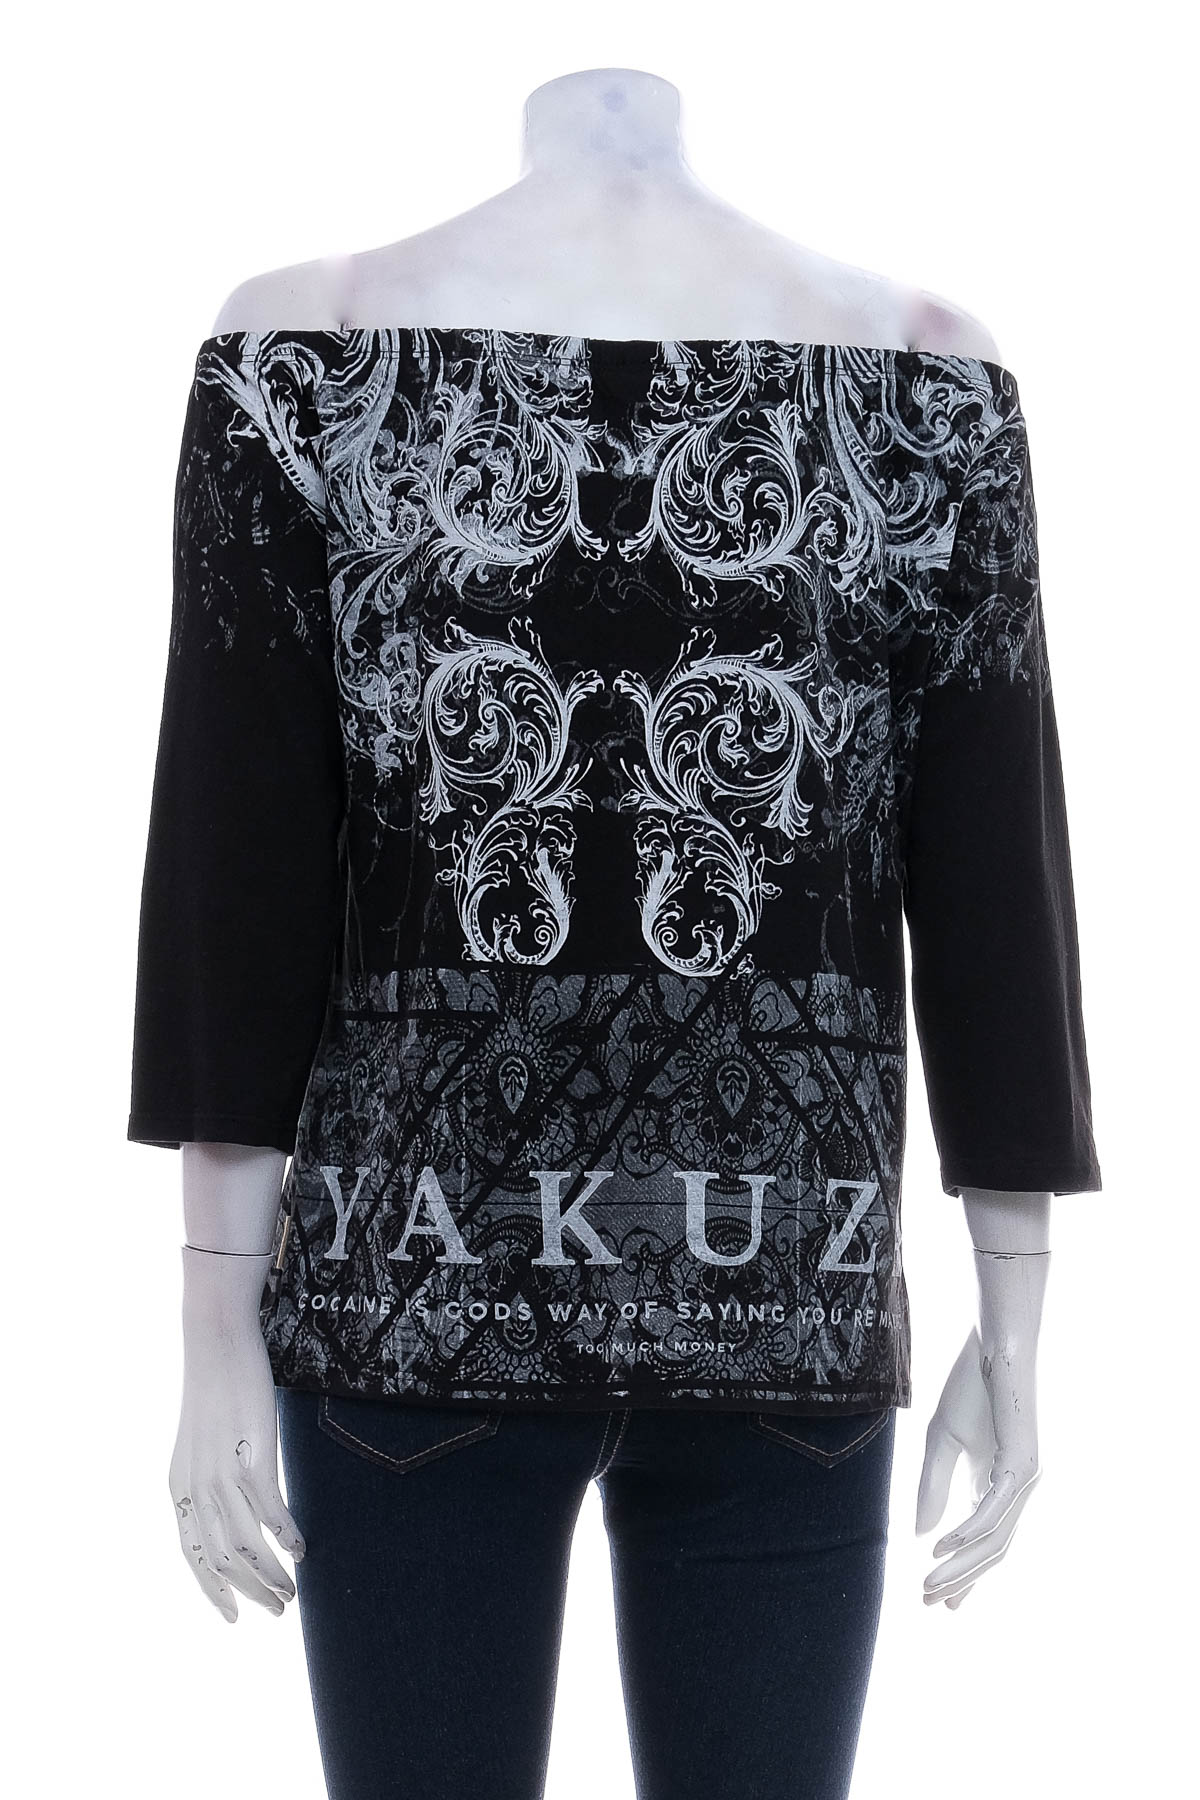 Women's blouse - Yakuza - 1